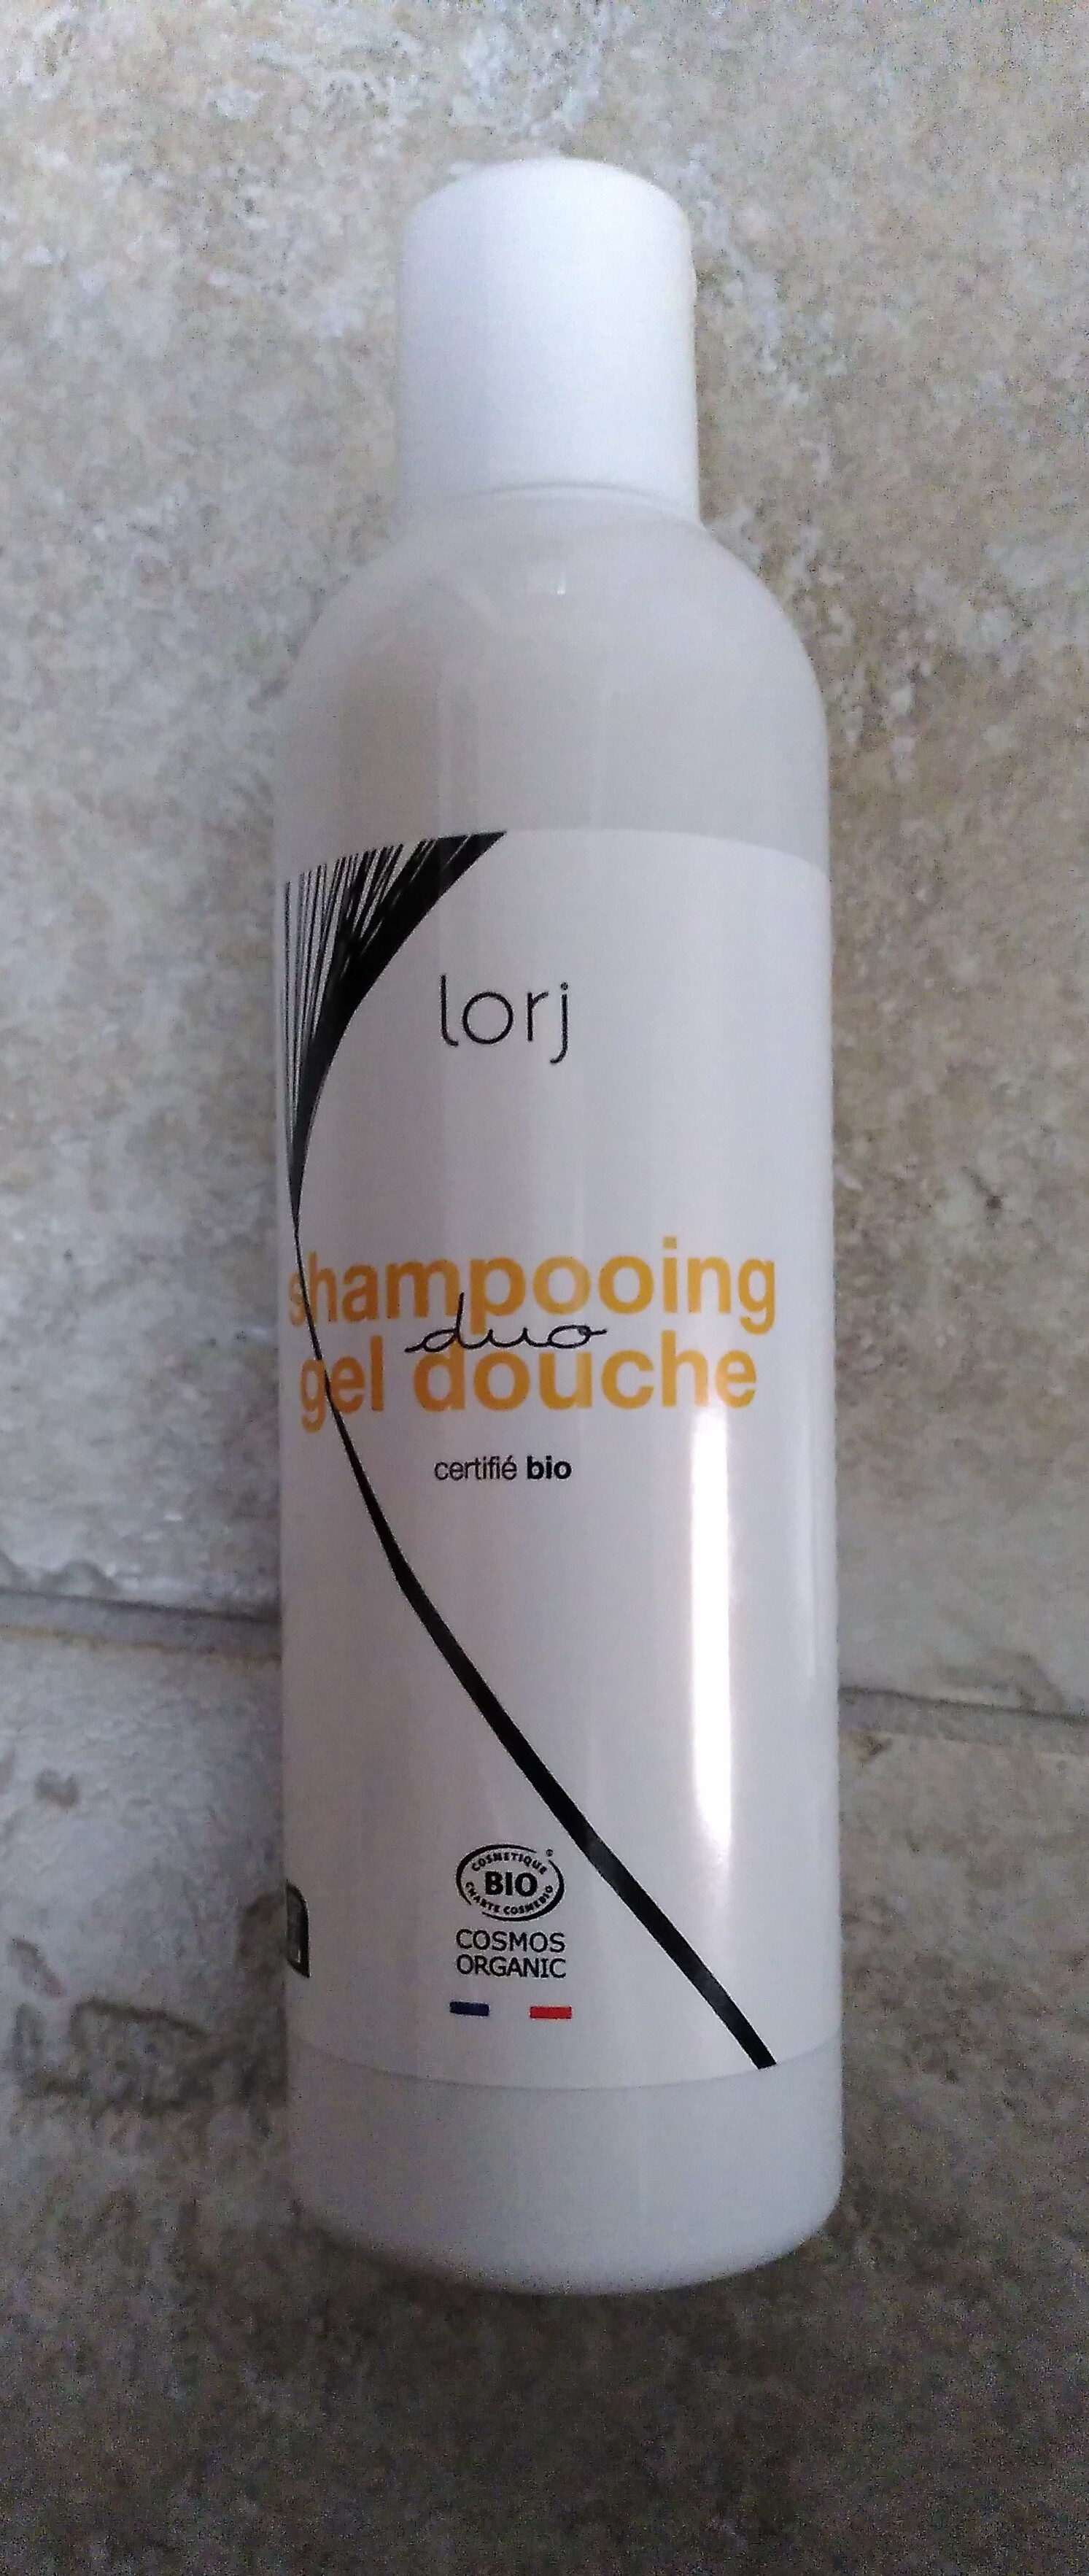 Duo shampoing gel douche - Продукт - fr